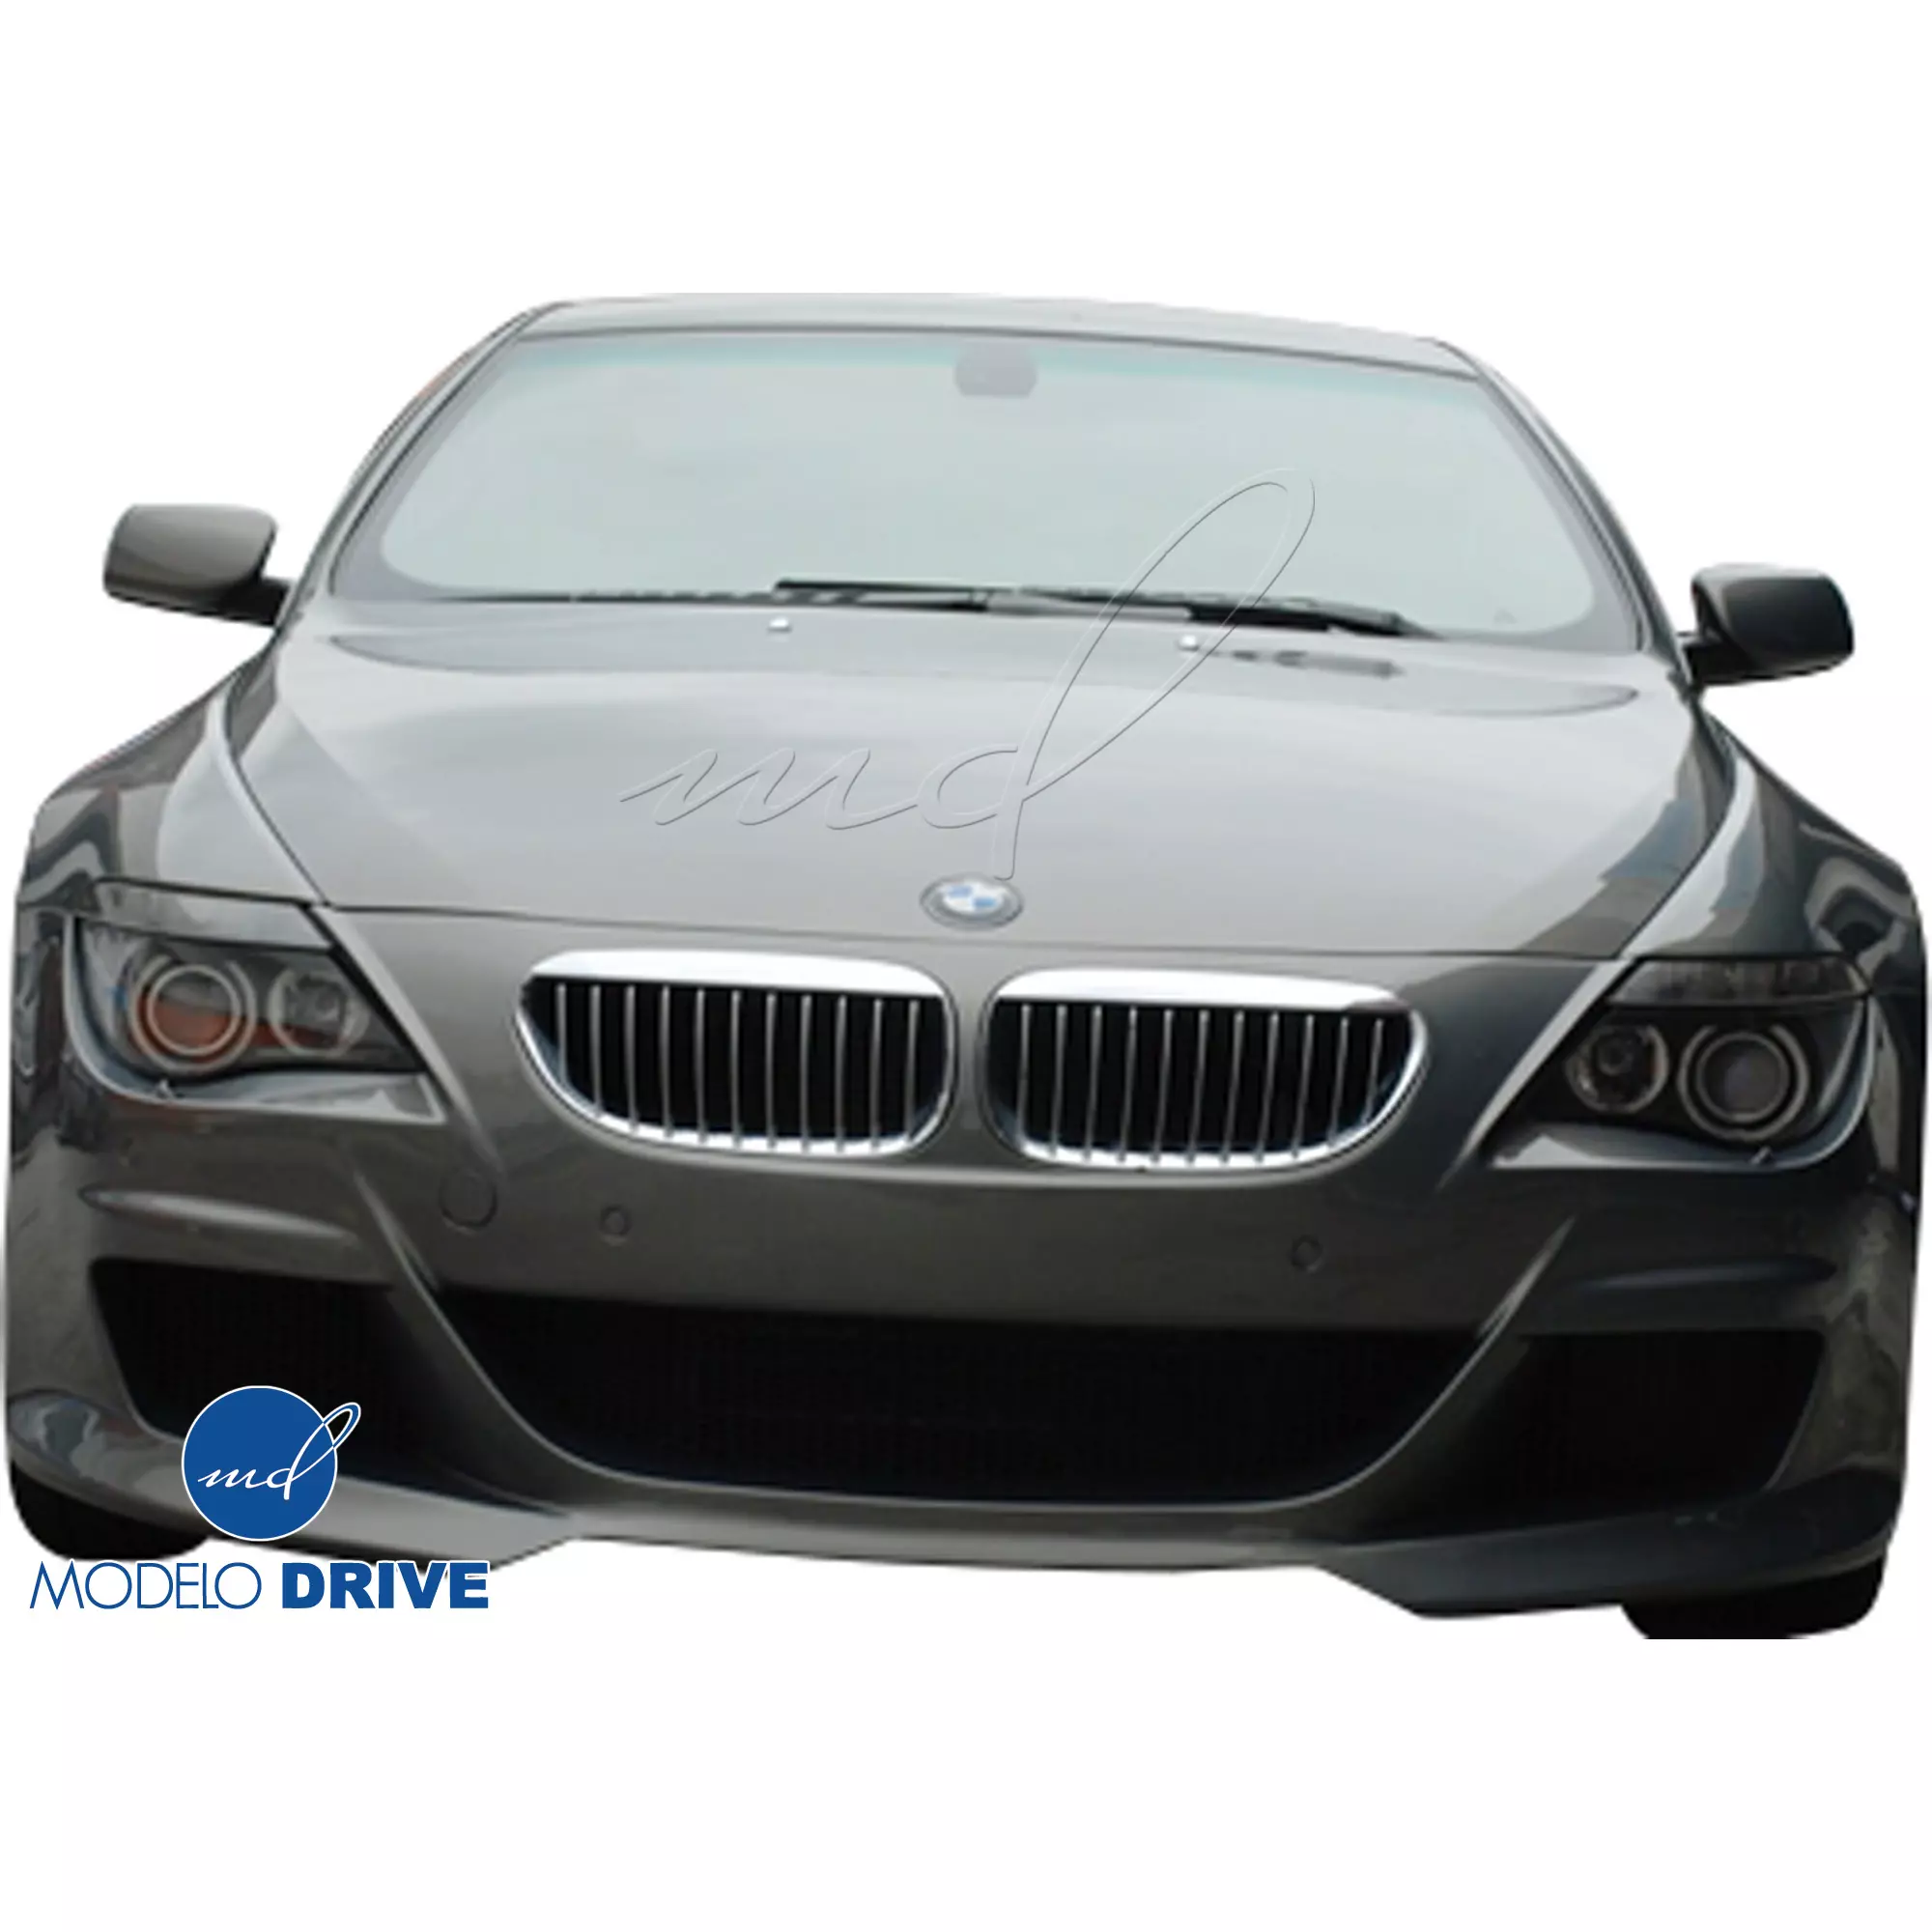 ModeloDrive FRP LDES Body Kit 4pc > BMW 6-Series E63 E64 2004-2010 > 2dr - Image 9